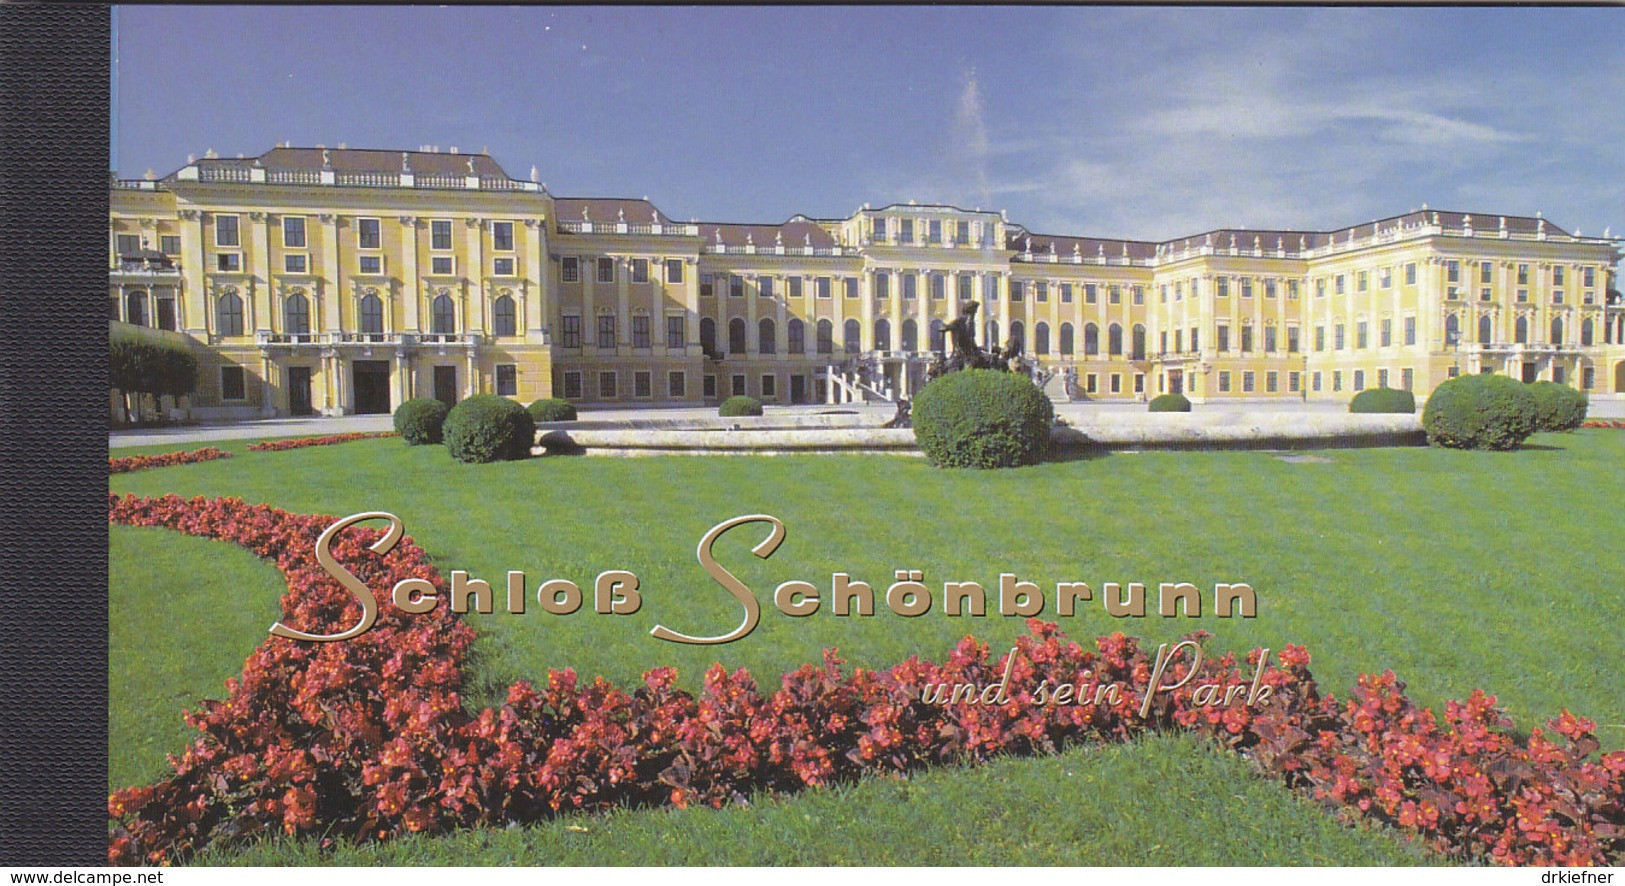 UNO WIEN Markenheftchen MH 0-3, Postfrisch **, Welterbe: Schloss Schönbrunn 1998 - Carnets